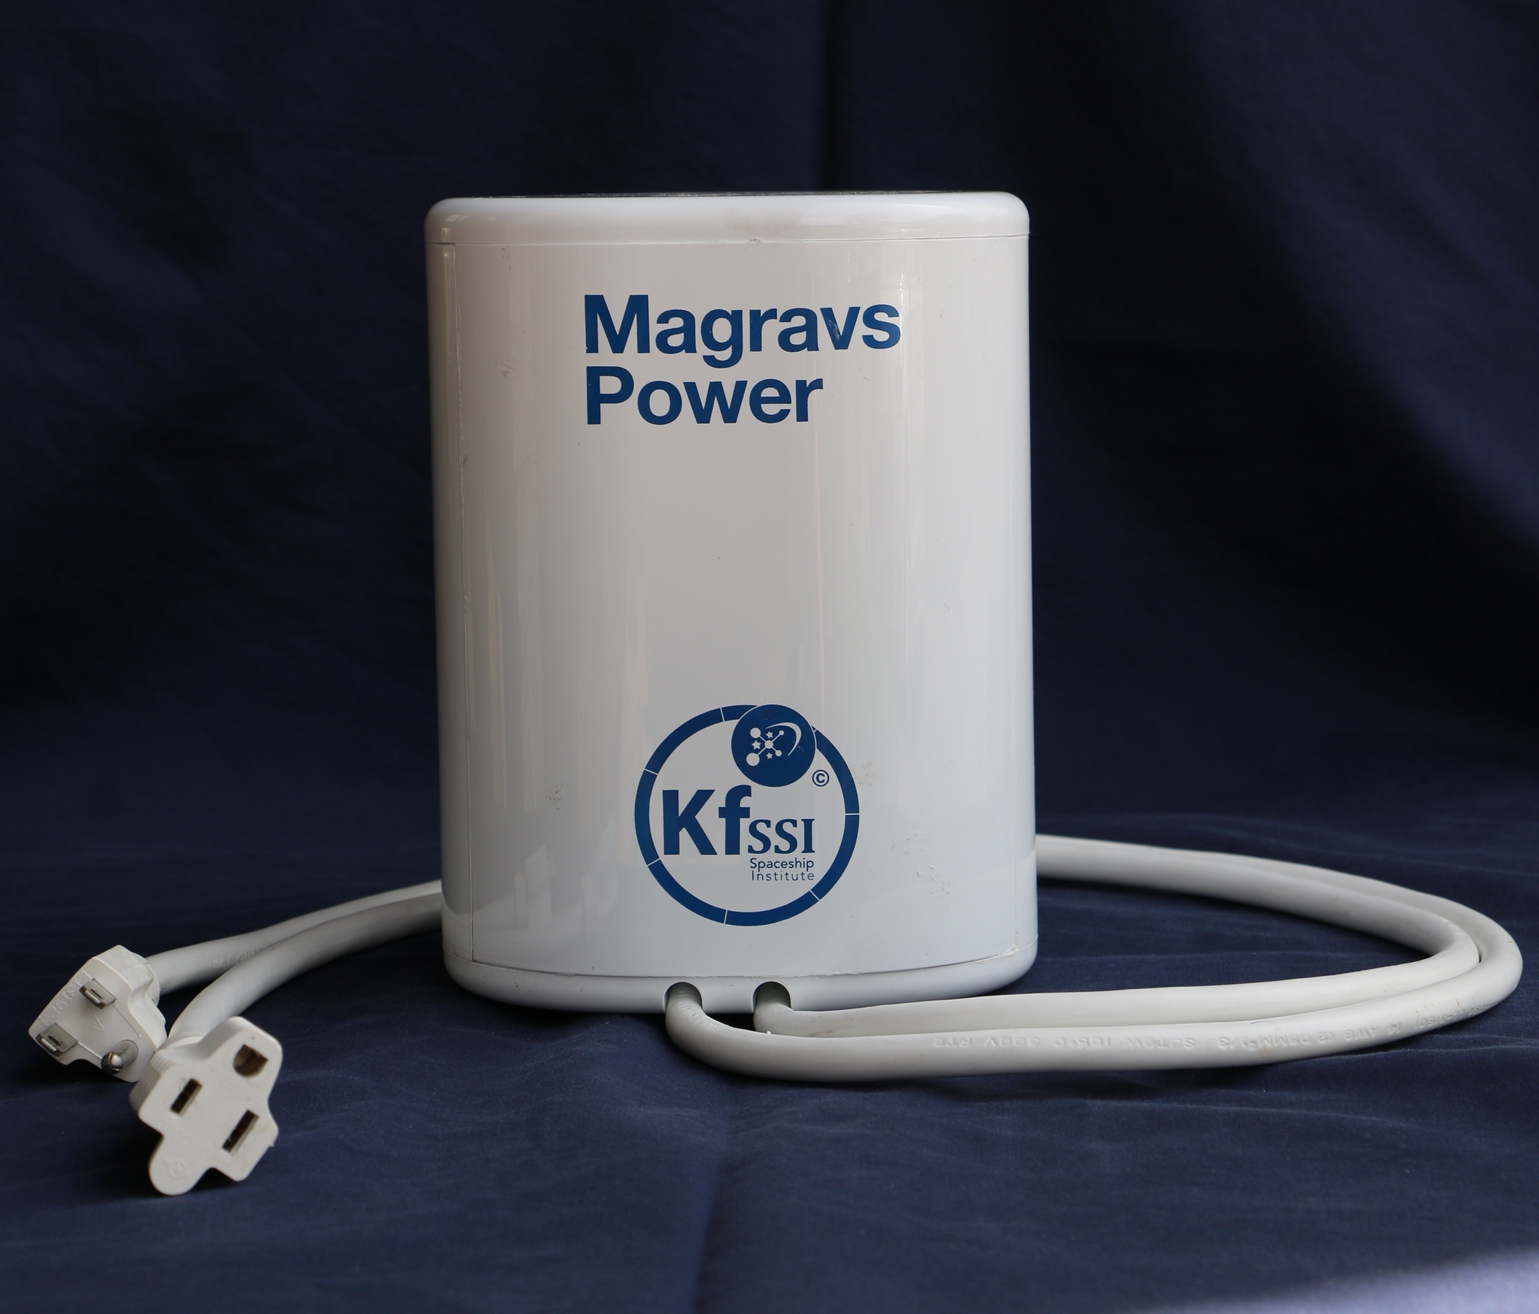 Magravs power.usa-diy-kit.jpg 